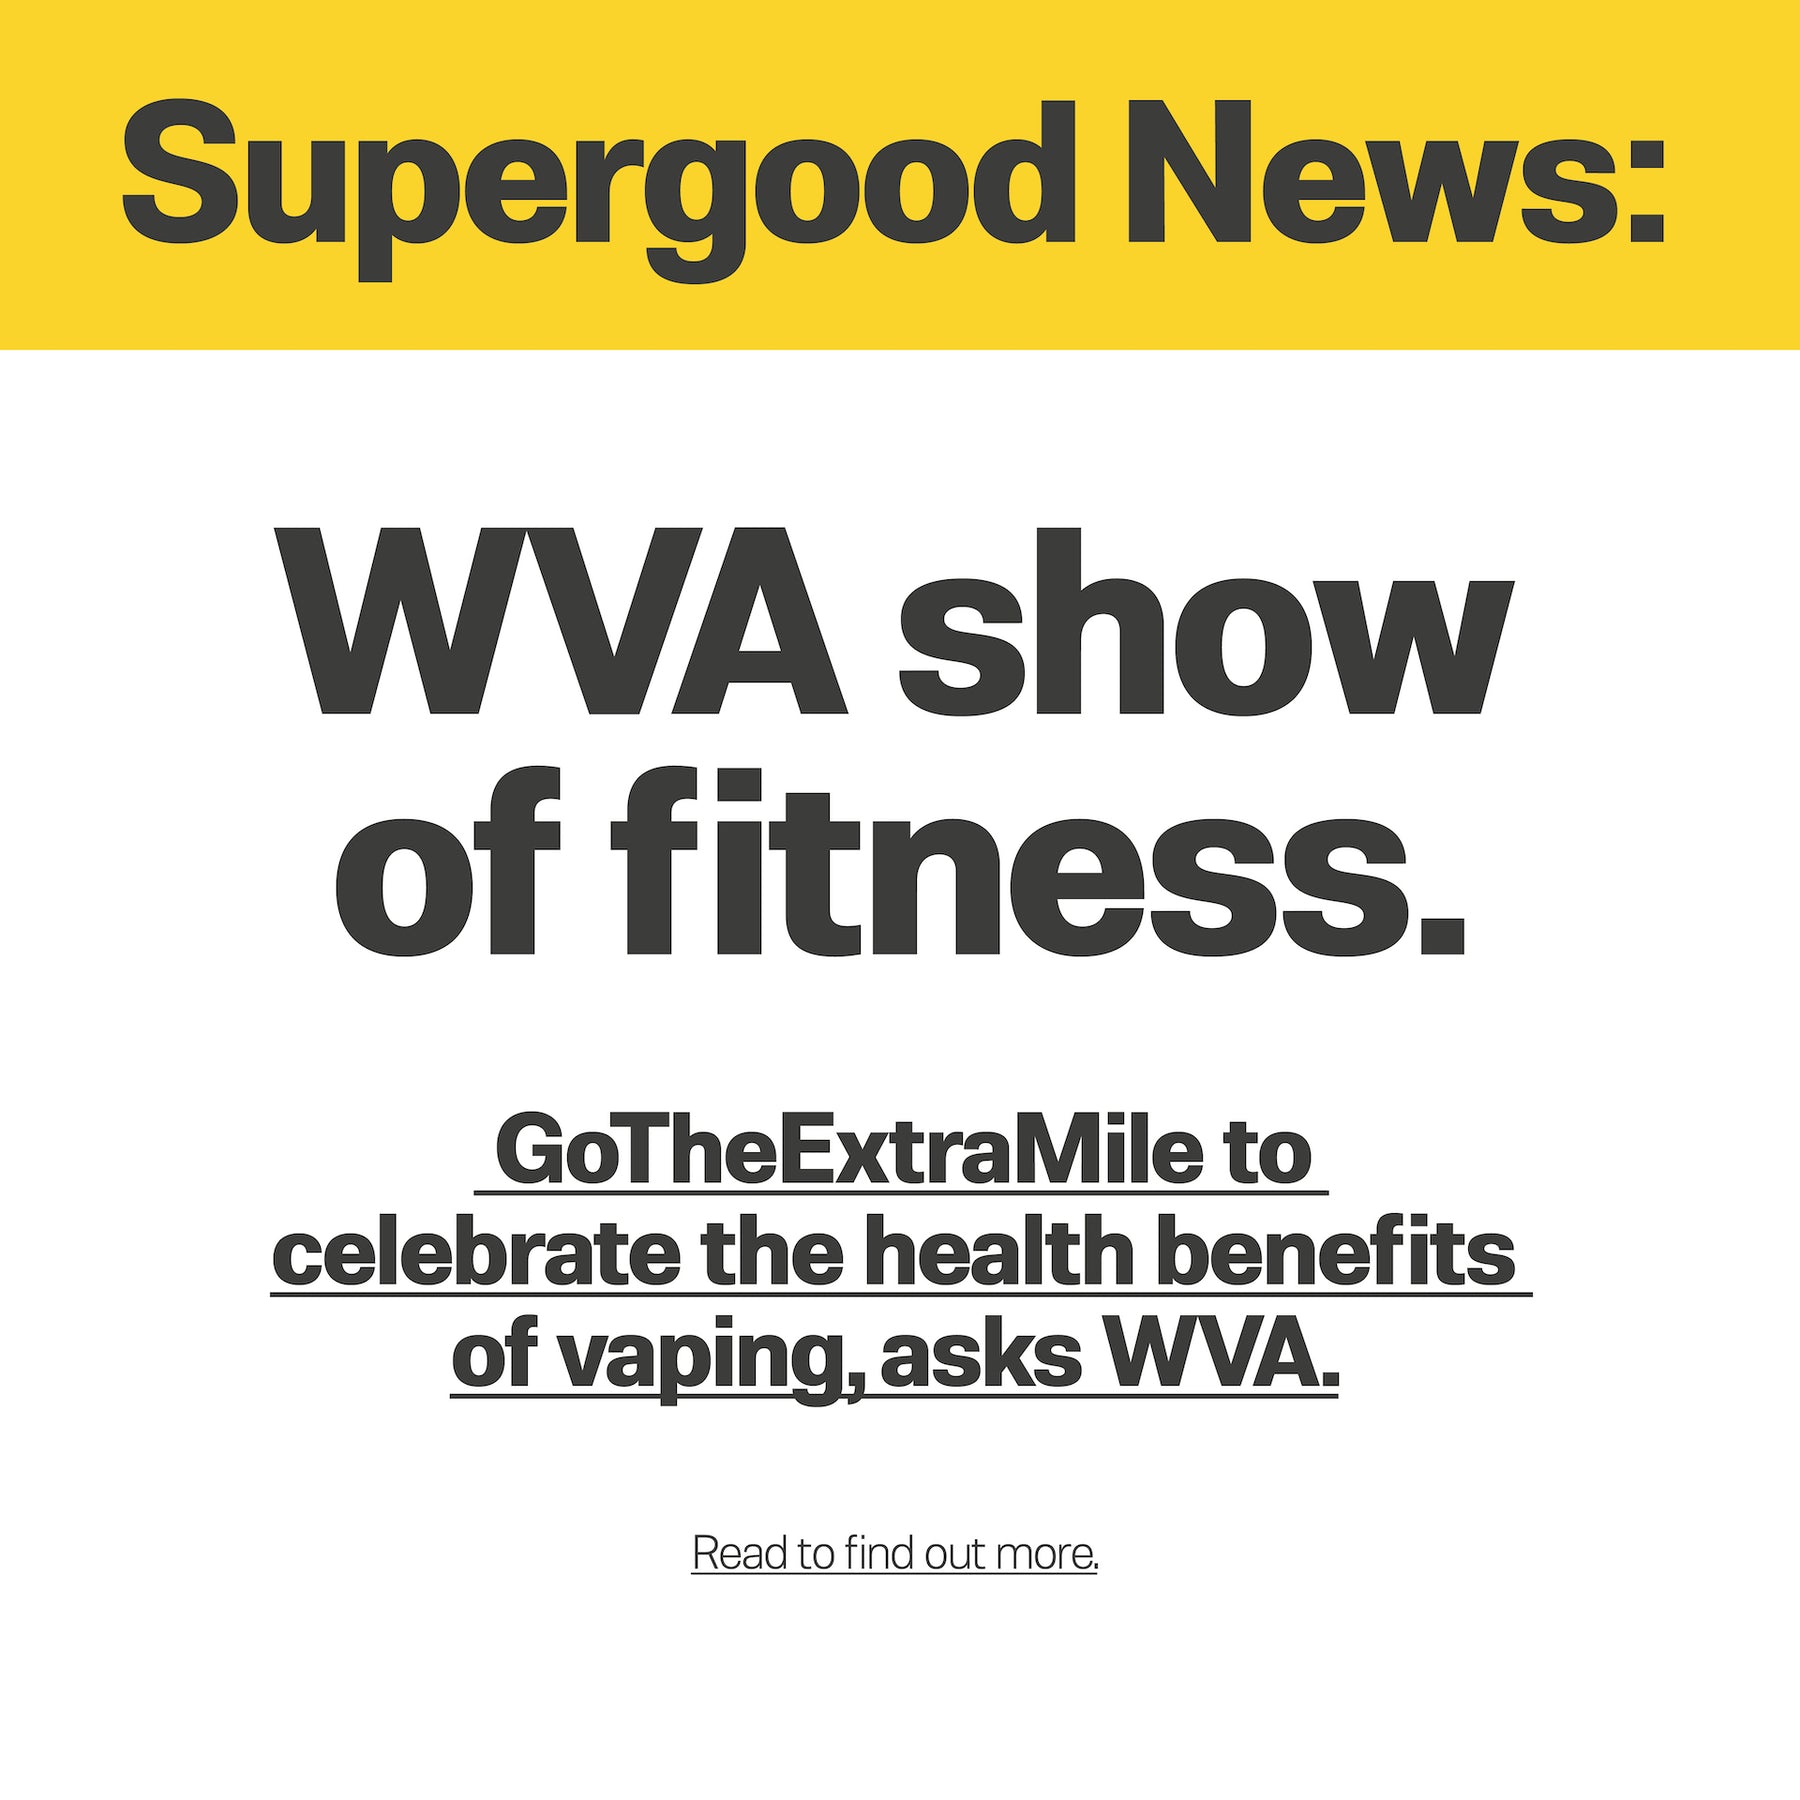 WVA Show of fitness